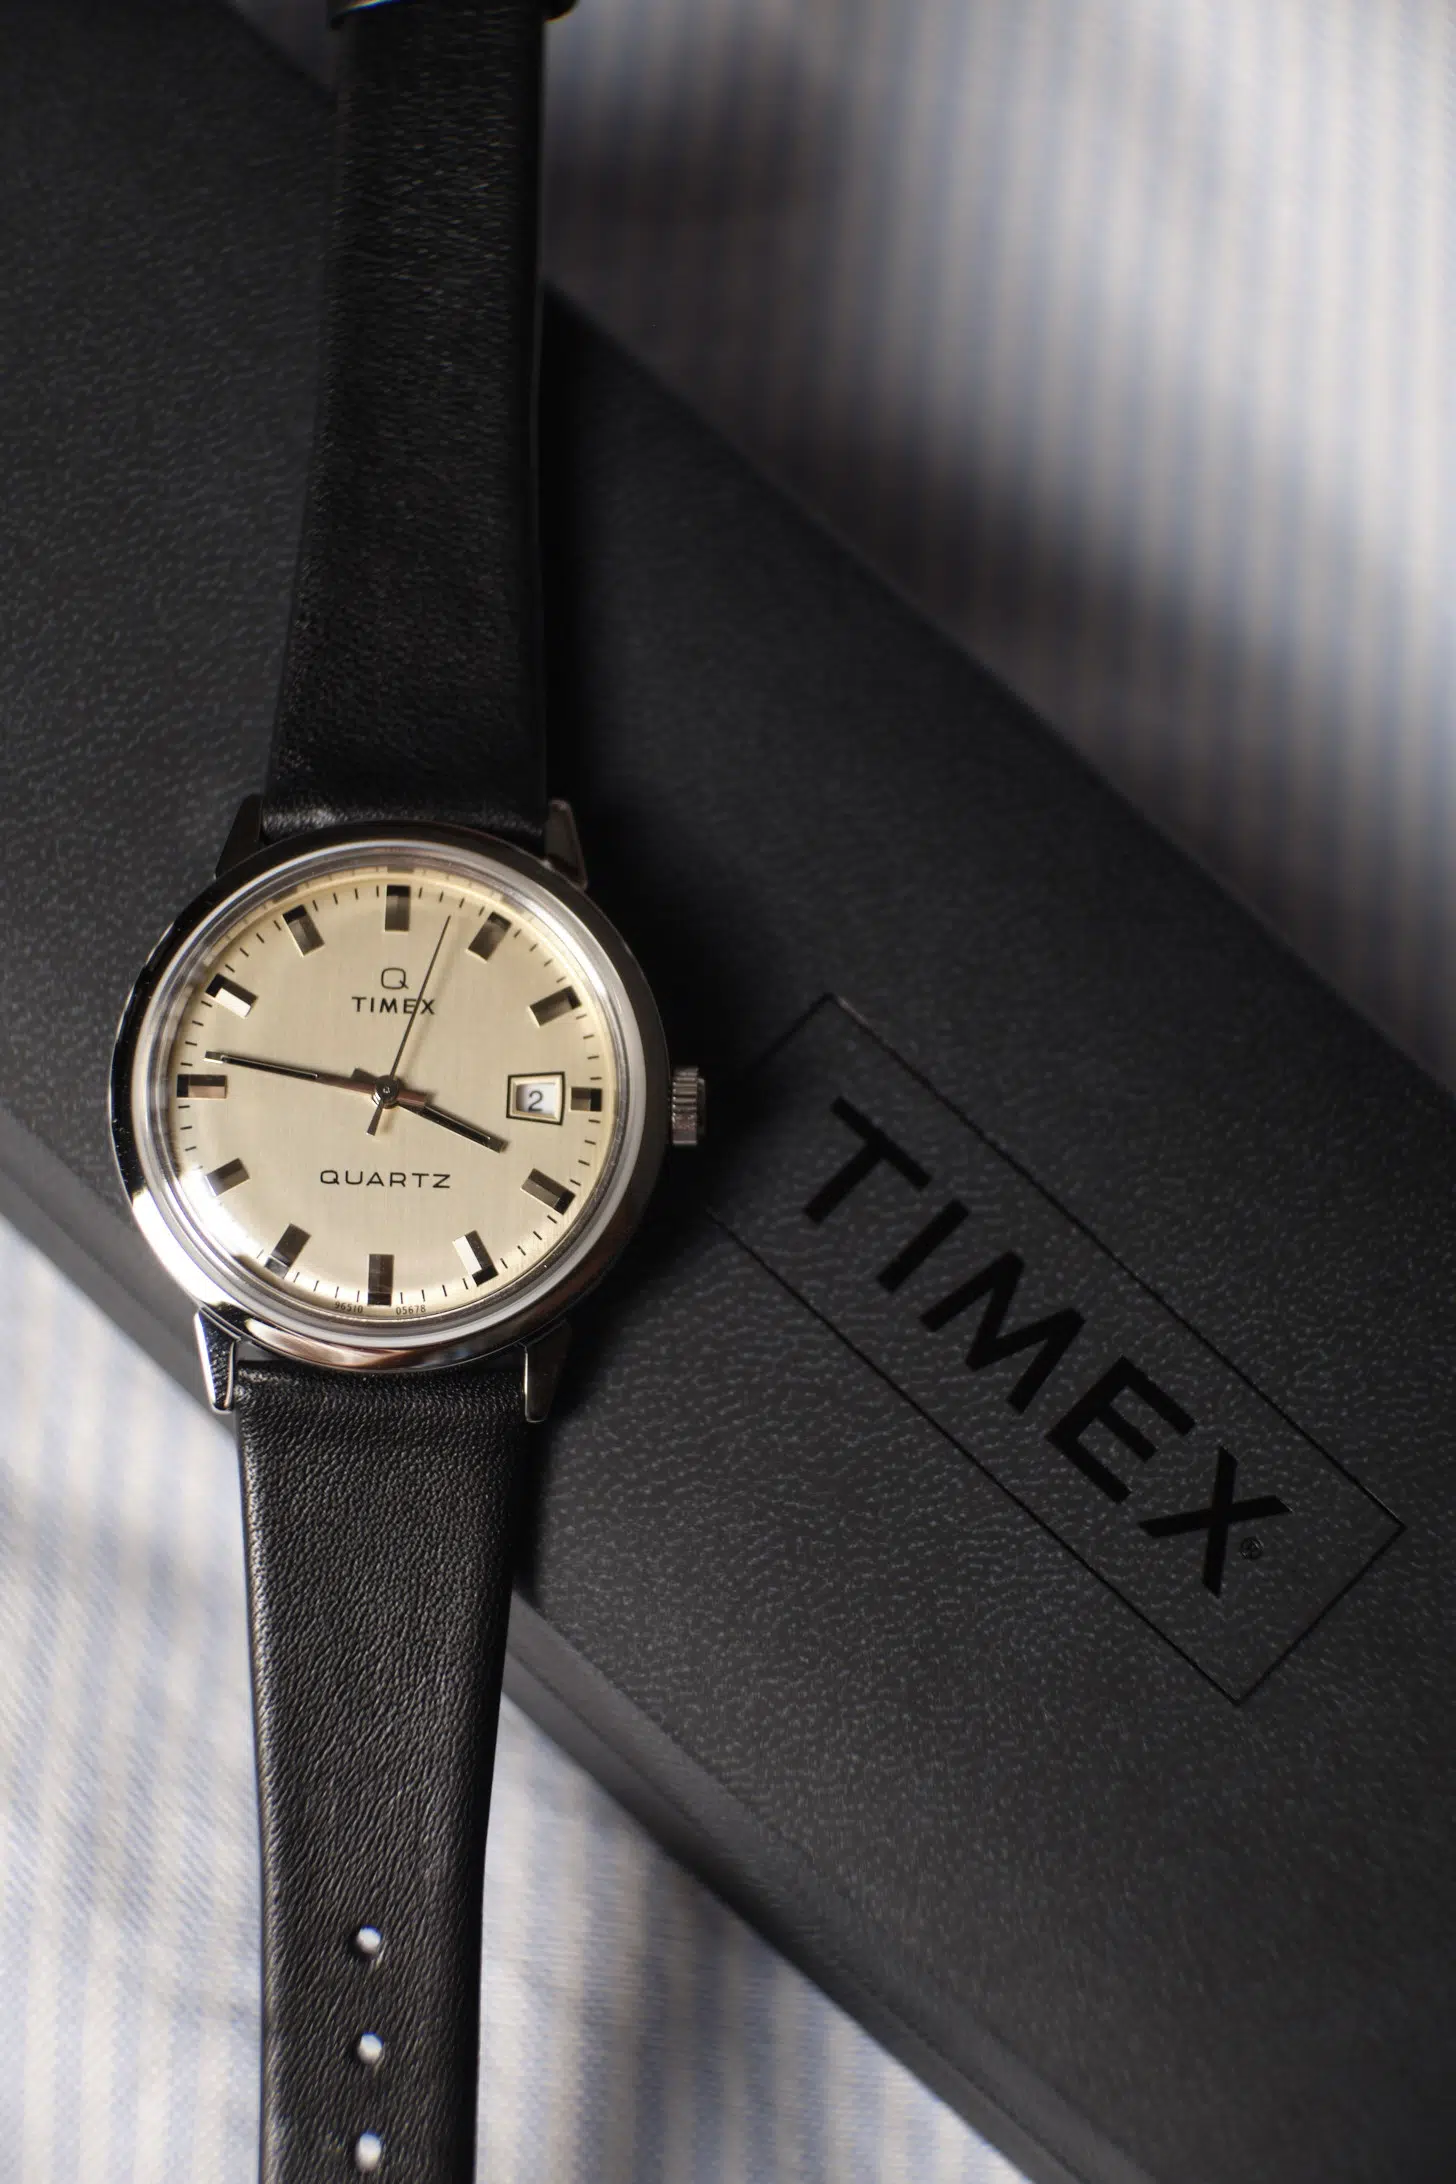 Timex Q 1978 on box